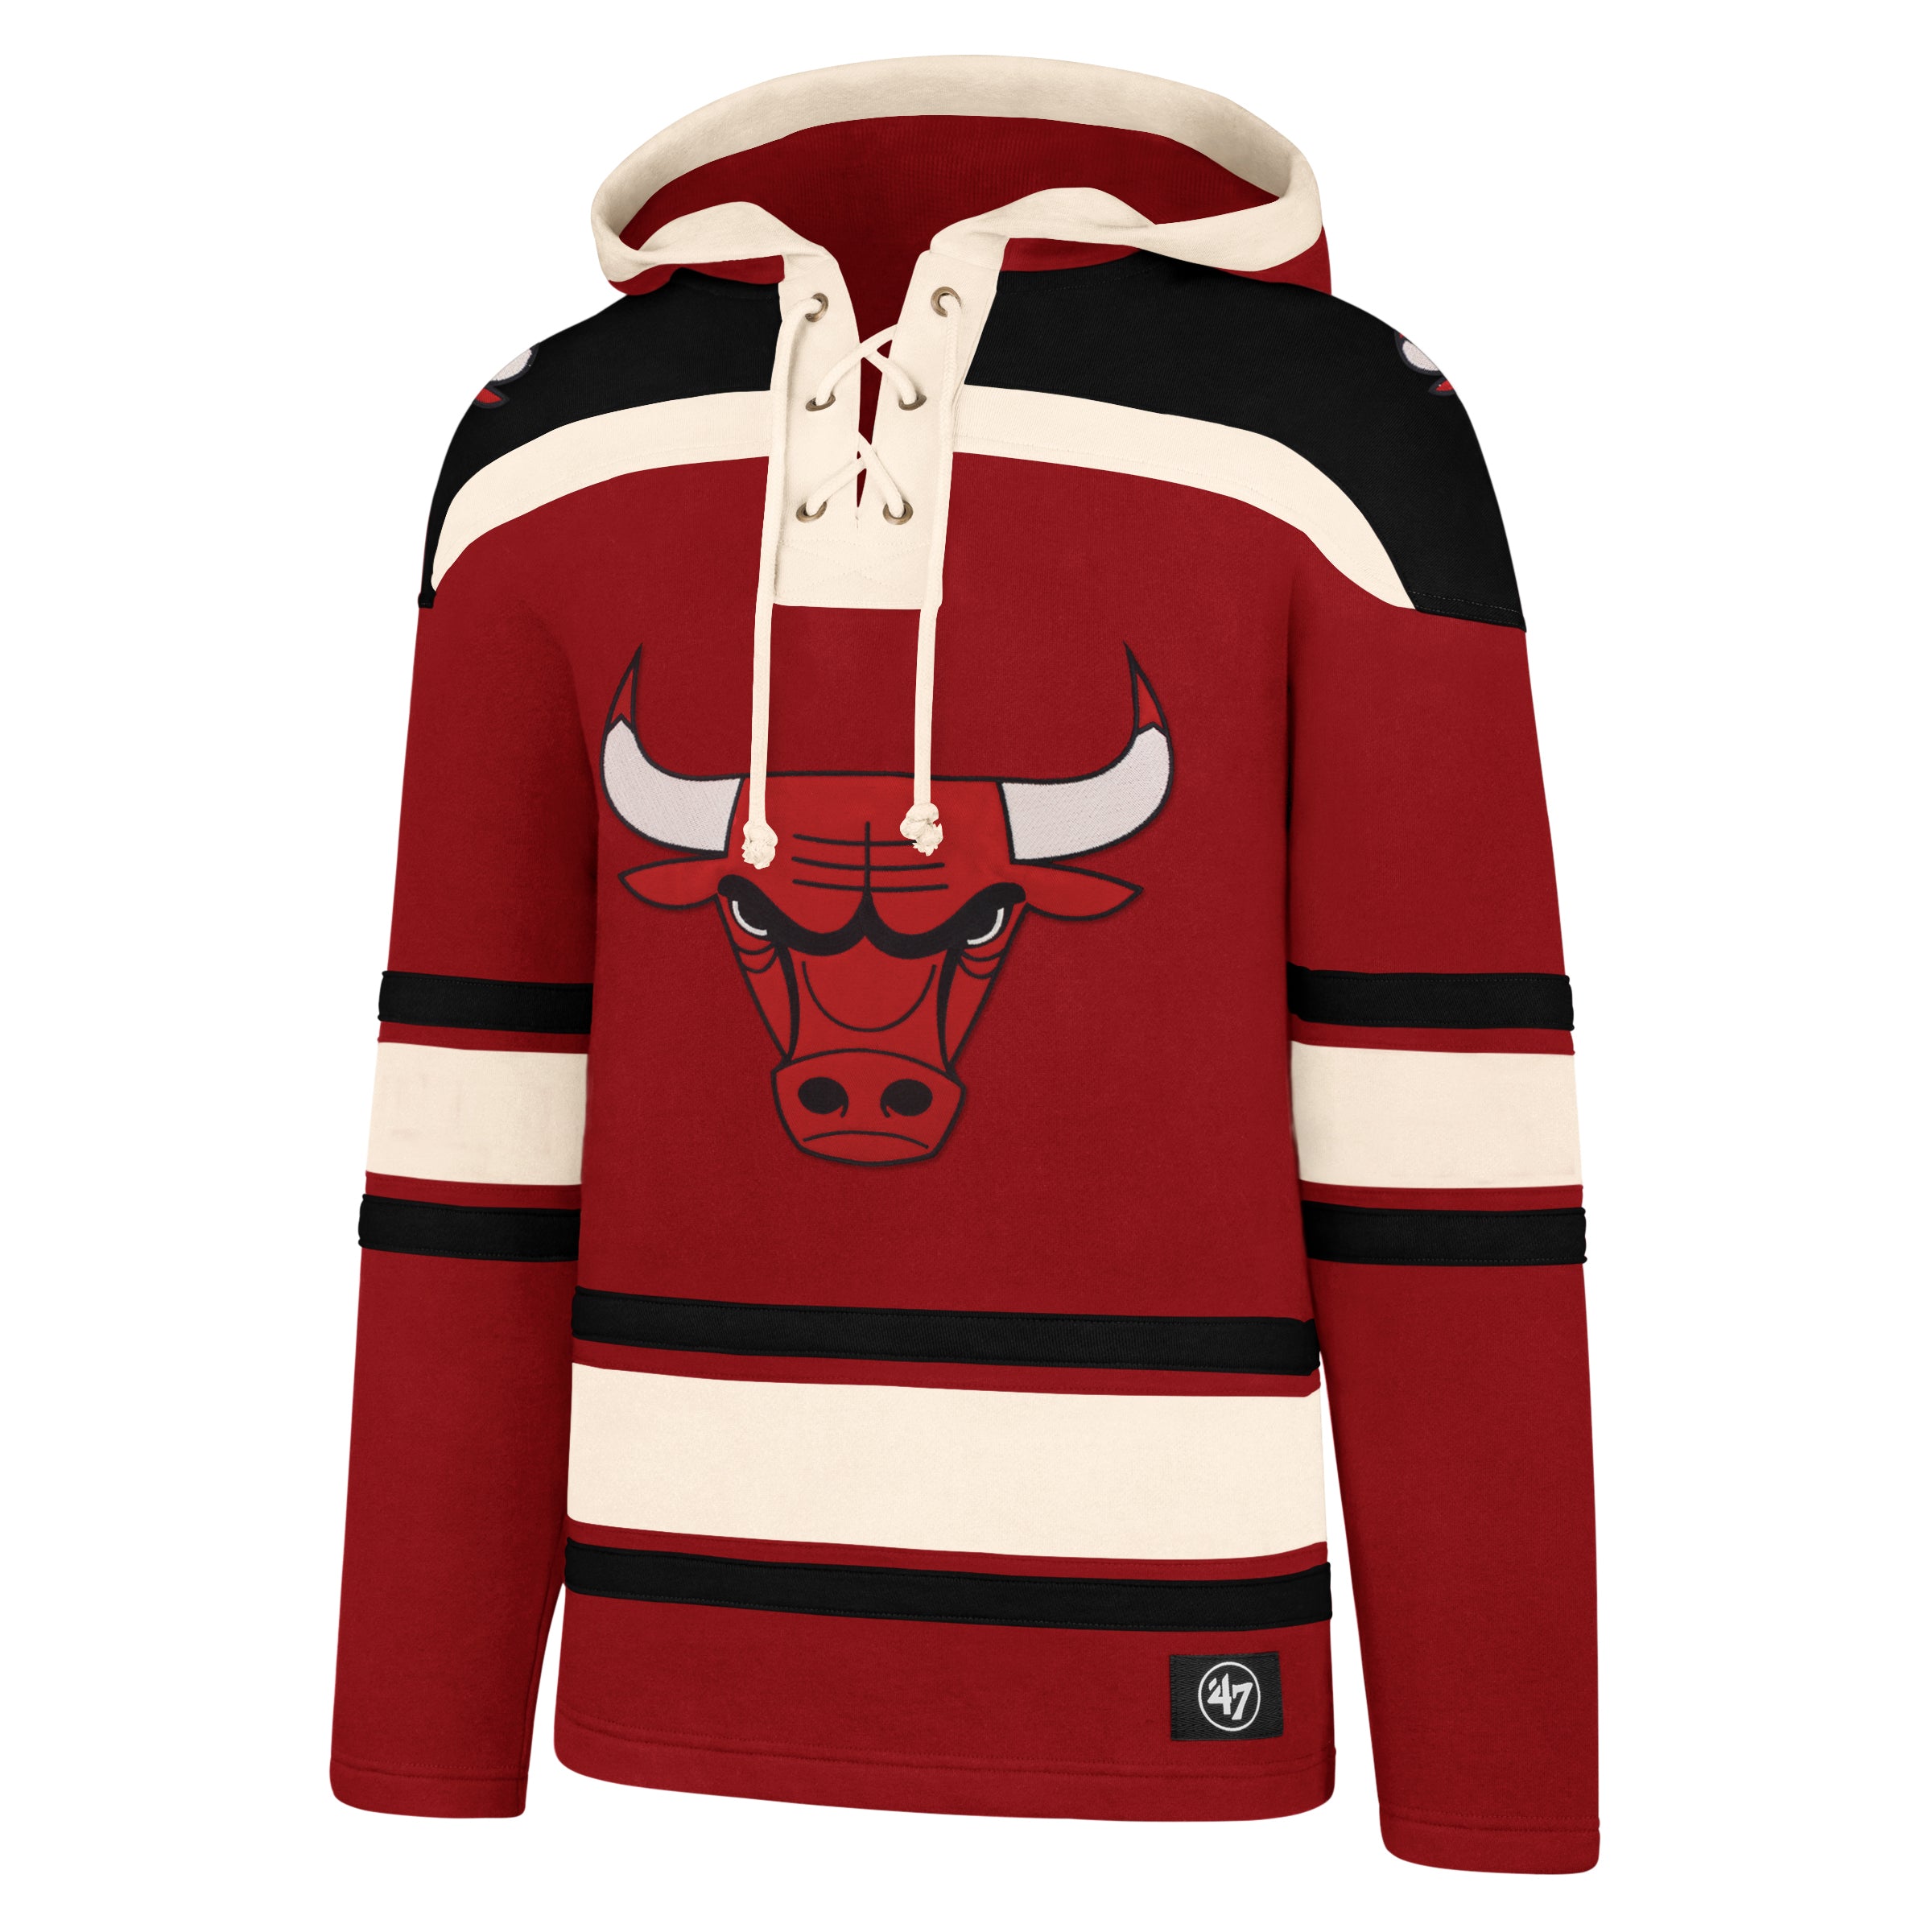 Nike NBA Chicago Bulls Hoodie Gray Grey Pullover Men Small S Sweater